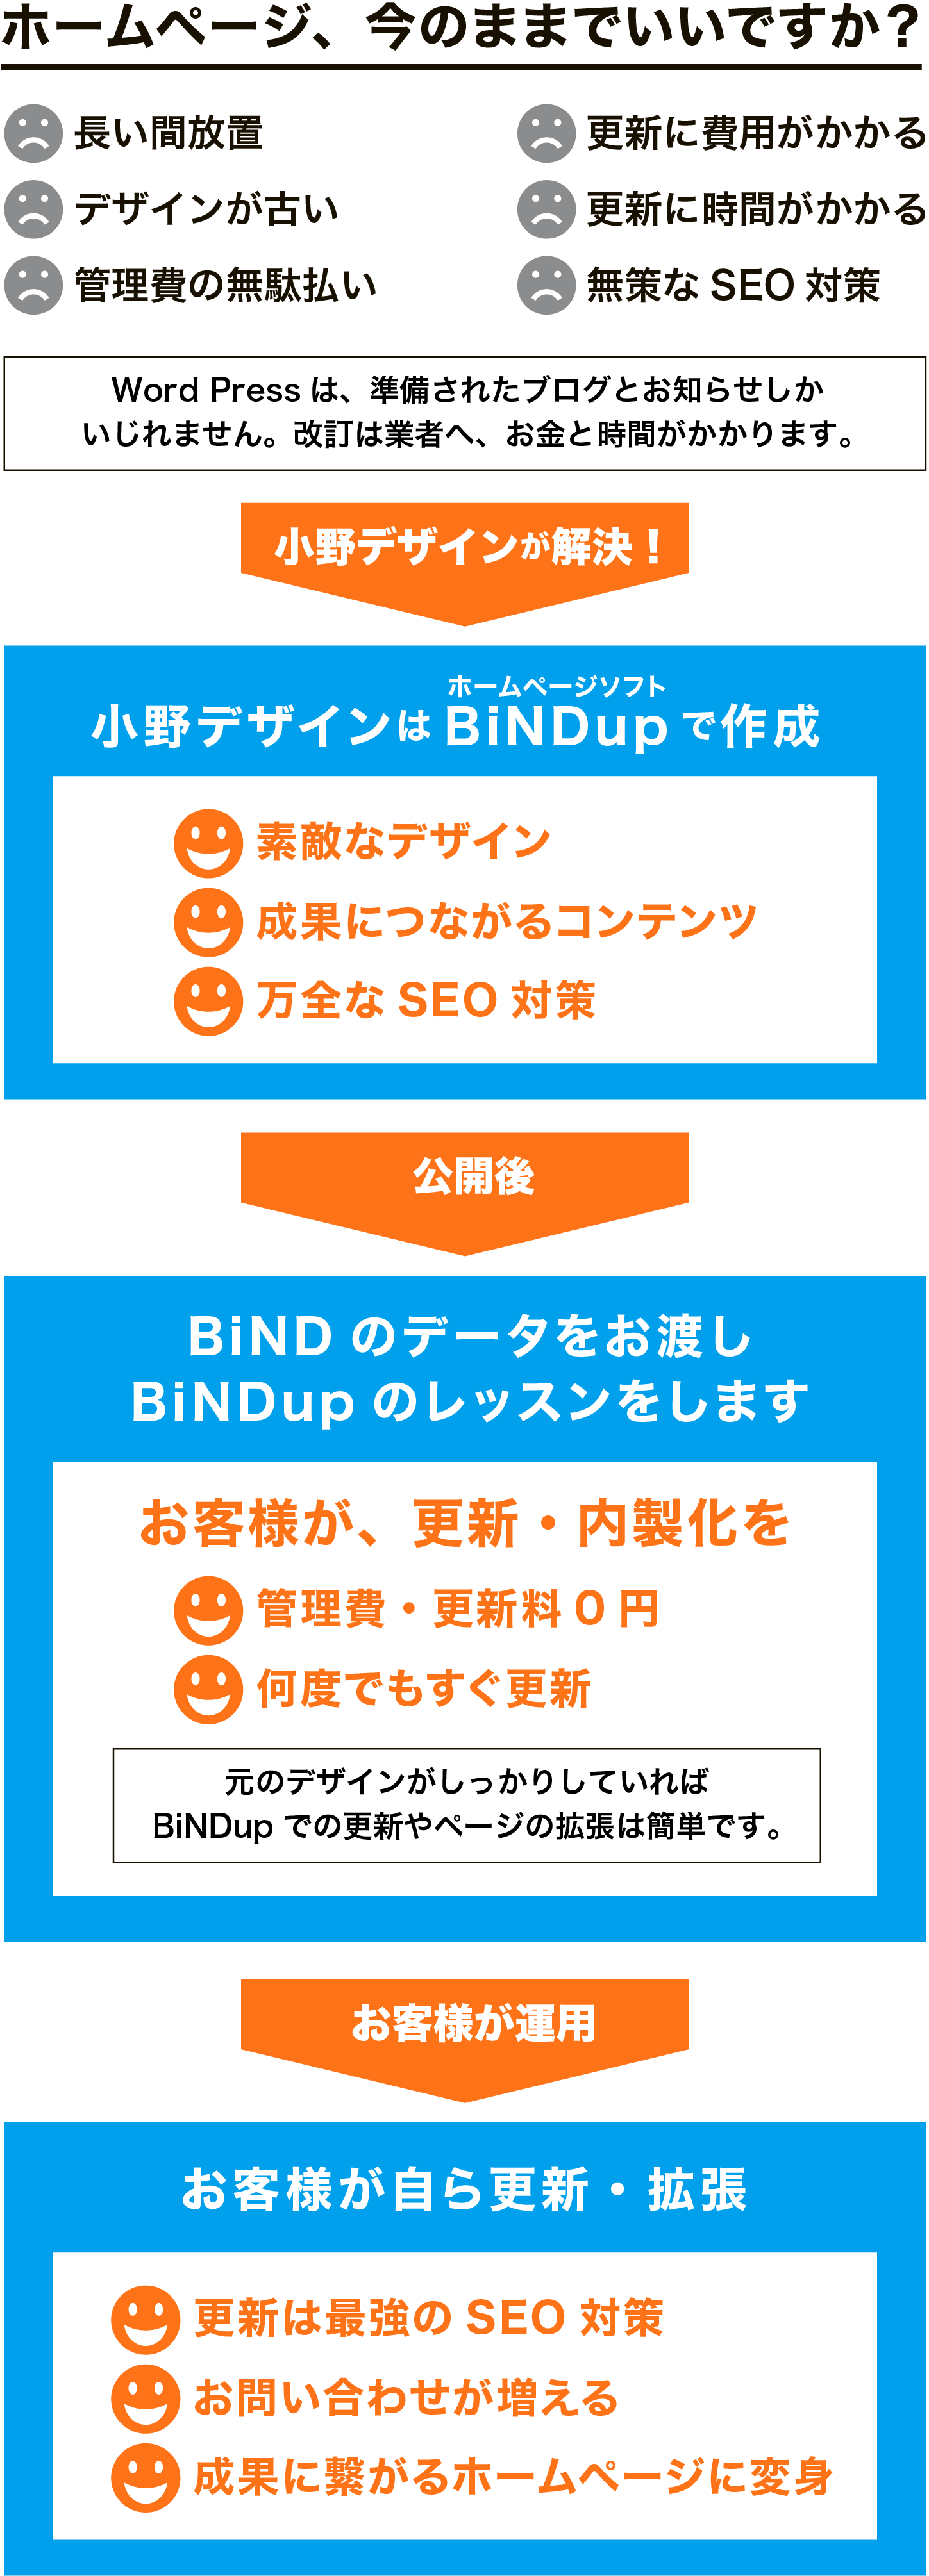 BiNDupの説明